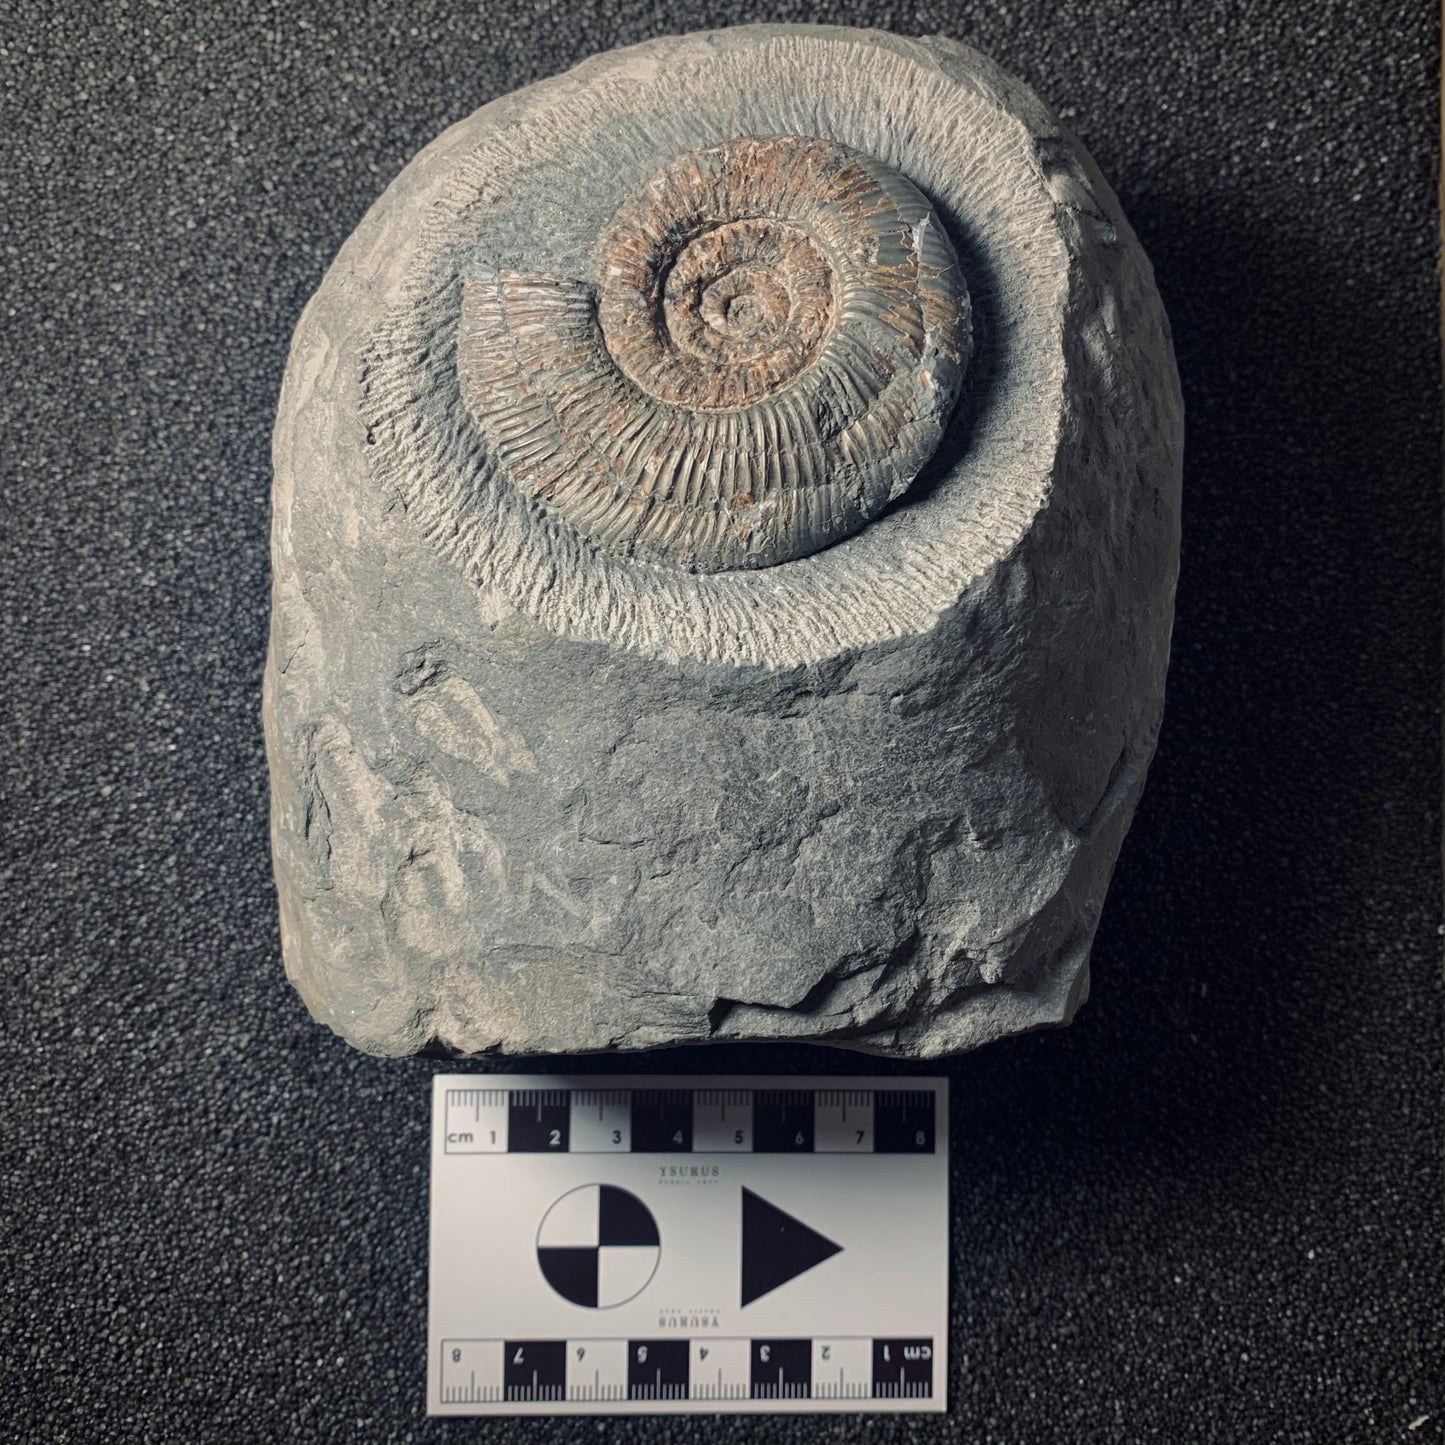 F278 | Ammonite | Dactylioceras tenuicostatum